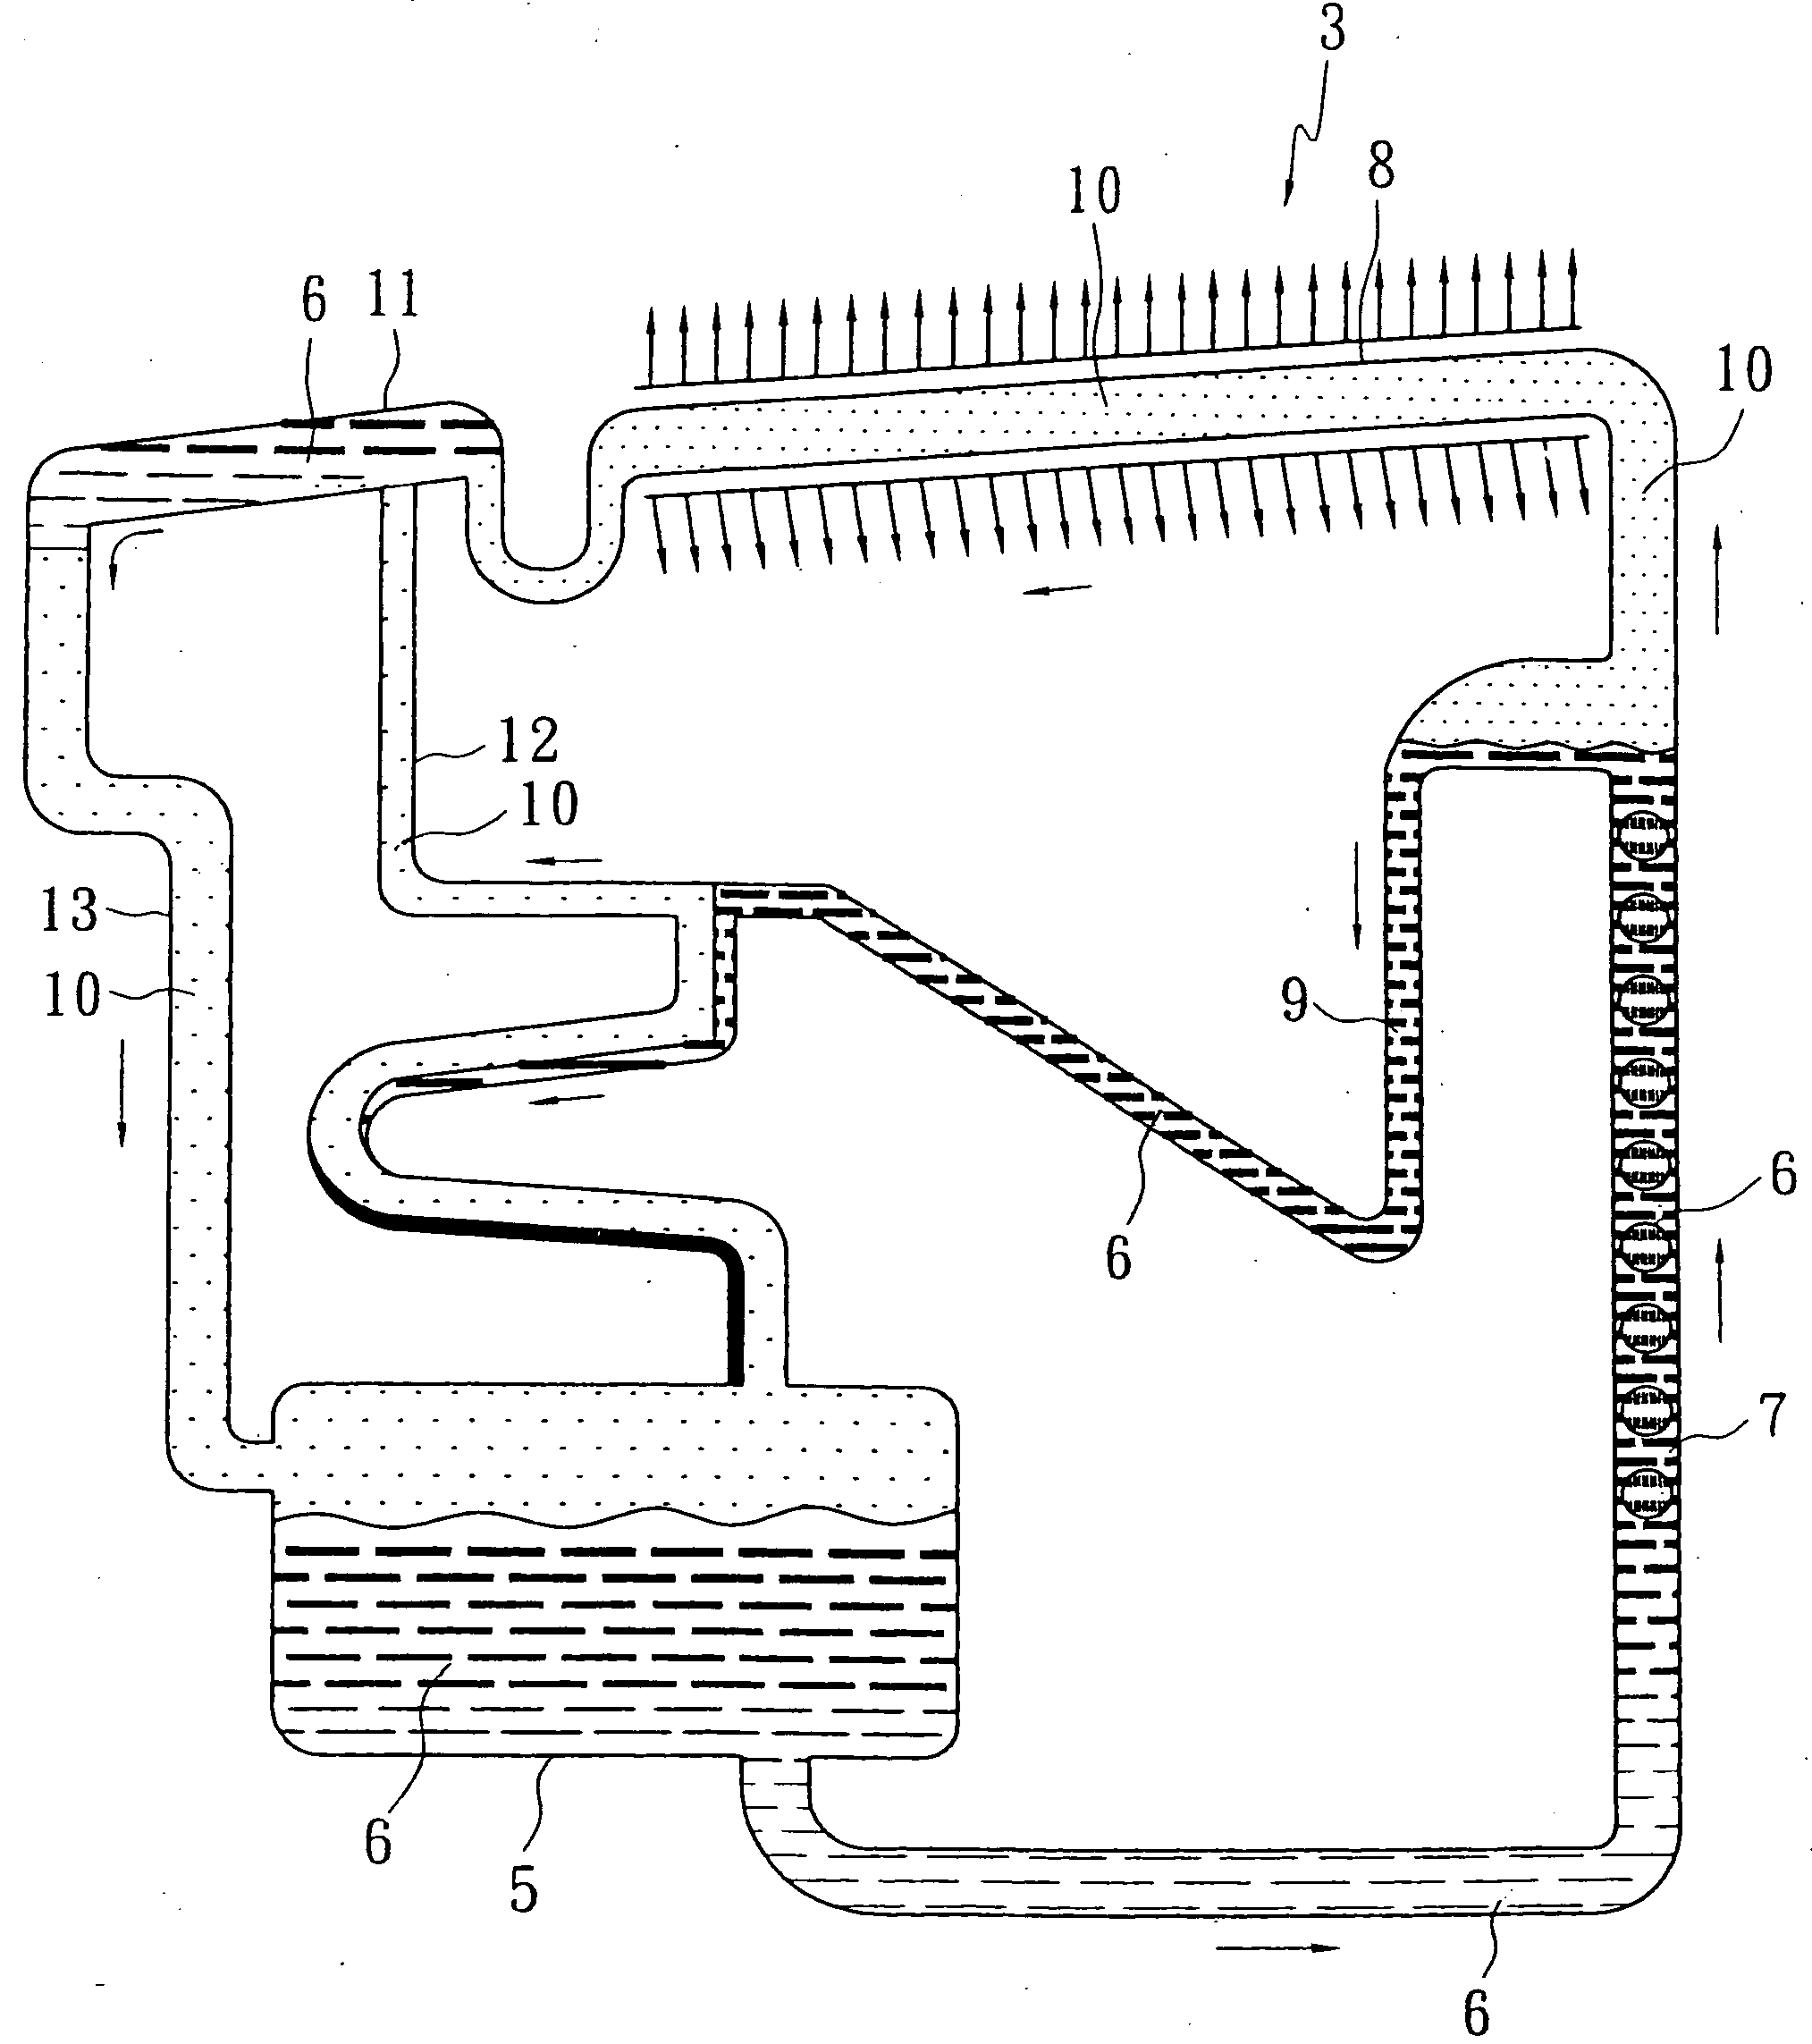 Structure of heat sink